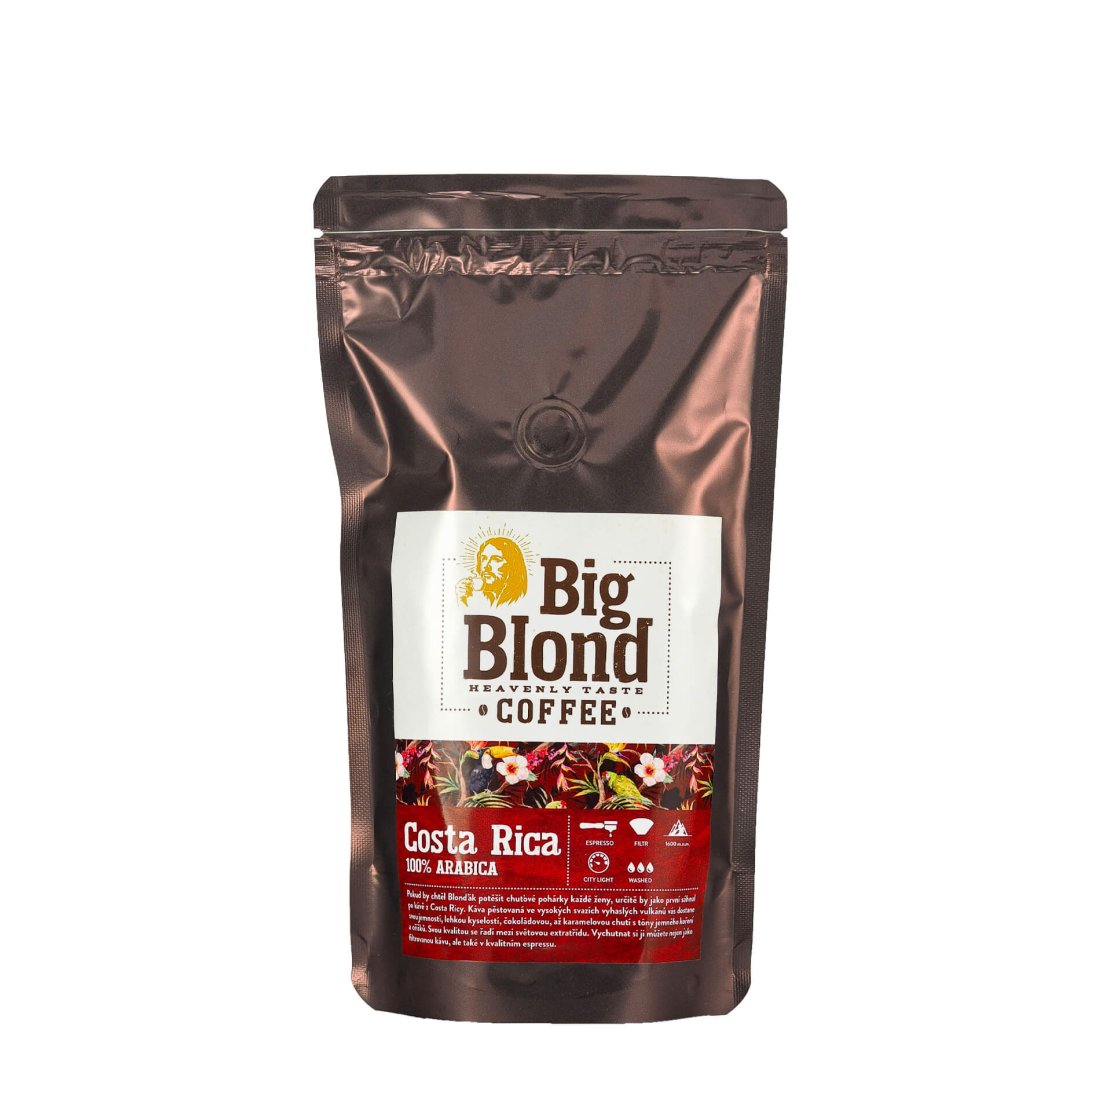 COSTA RICA Tarrazu San Rafael 100% arabica BIG BLOND COFFEE 250 g